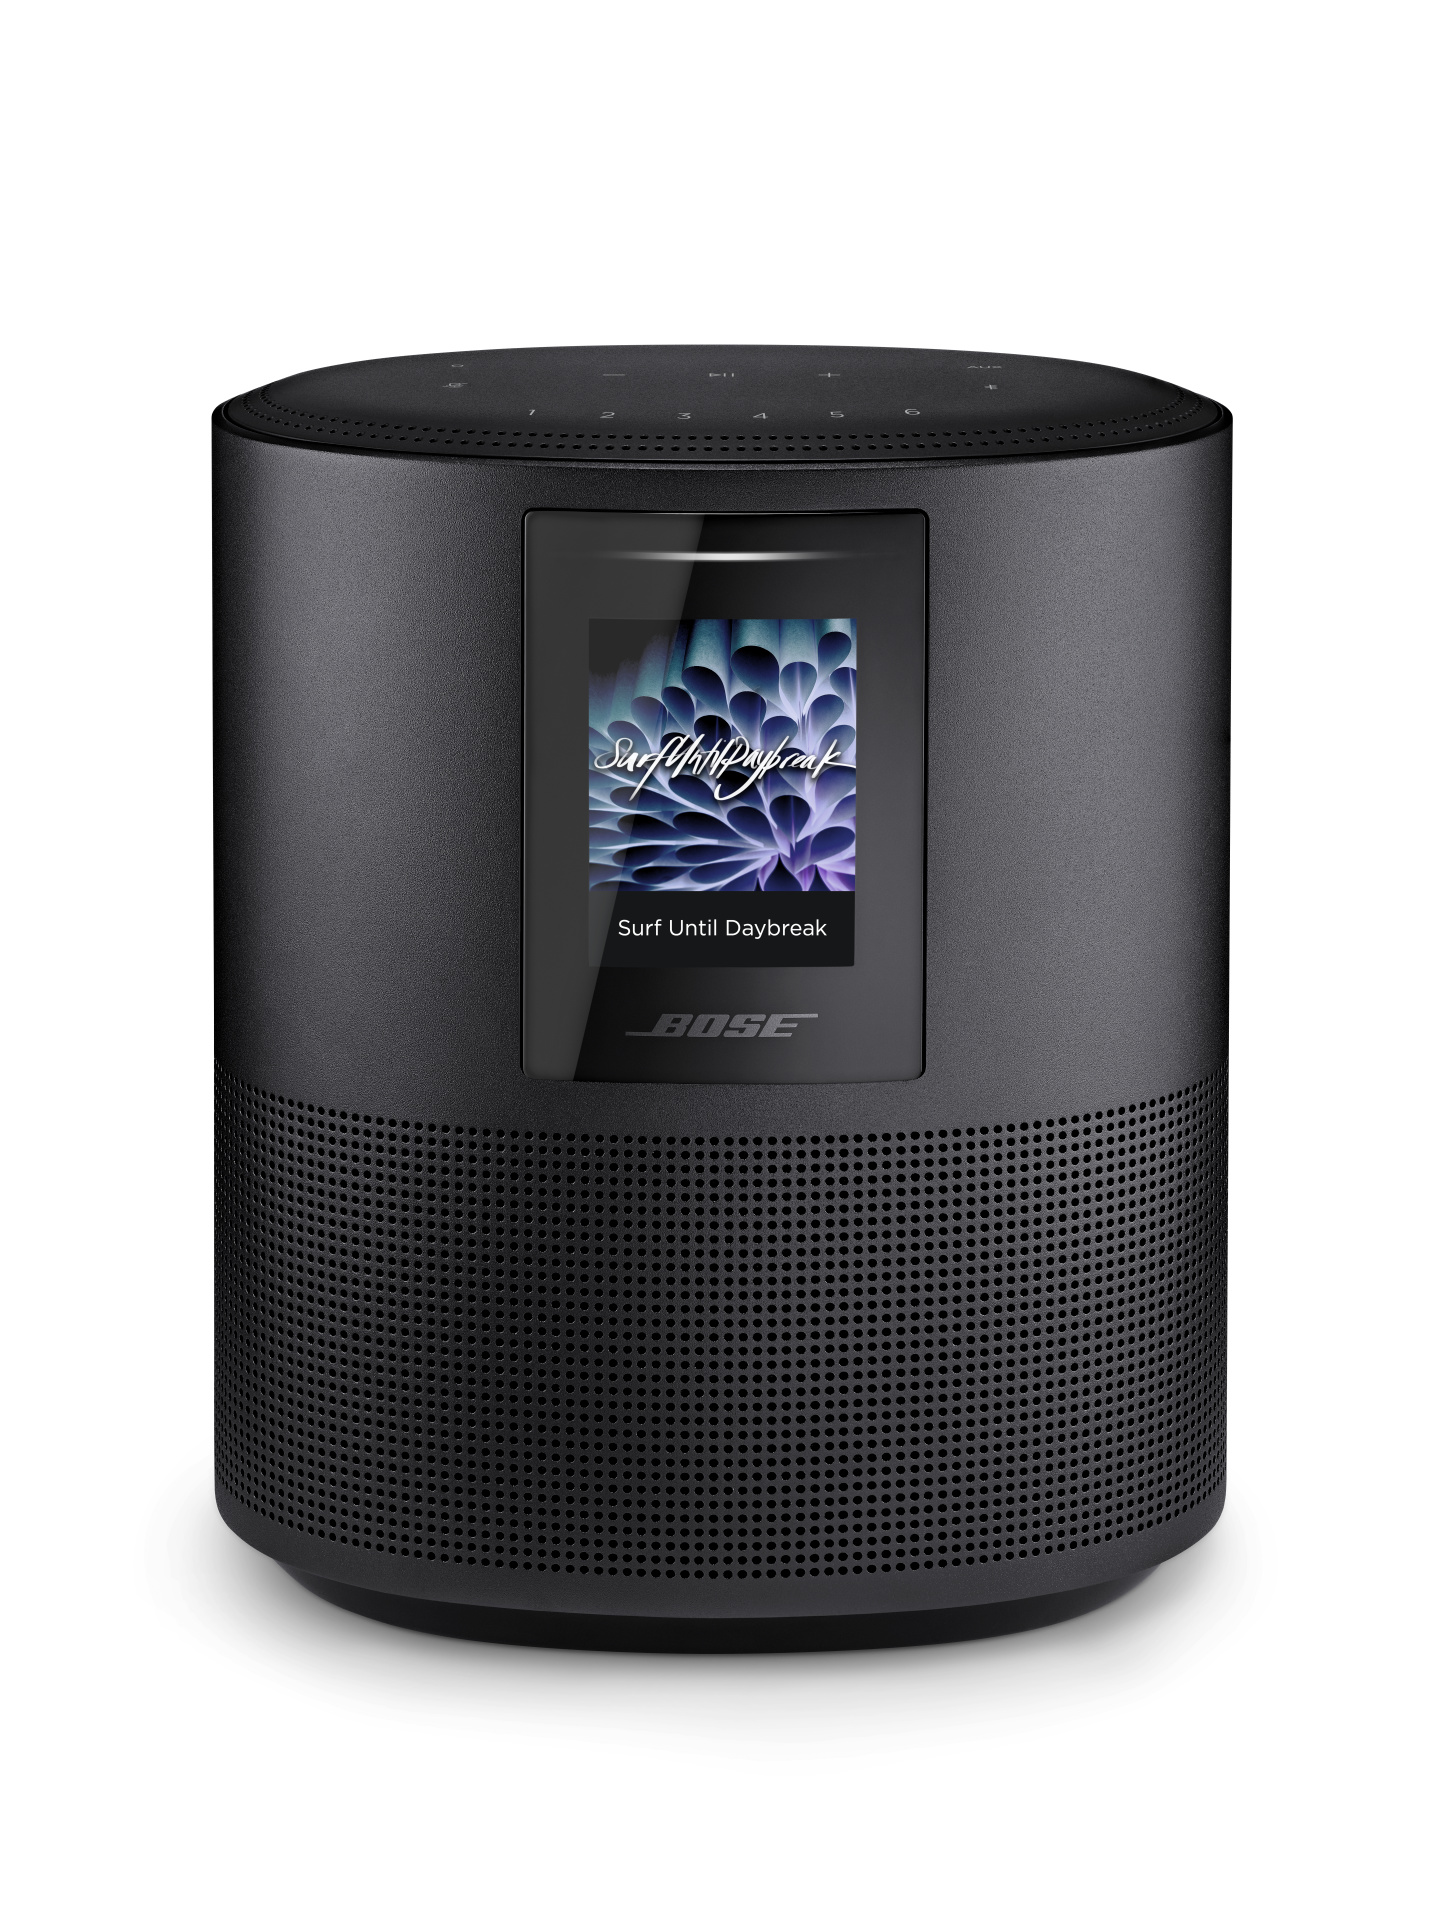 Bose Home Speaker 500 Wireless Smart Speaker with Google Assistant - Black - image 1 of 6